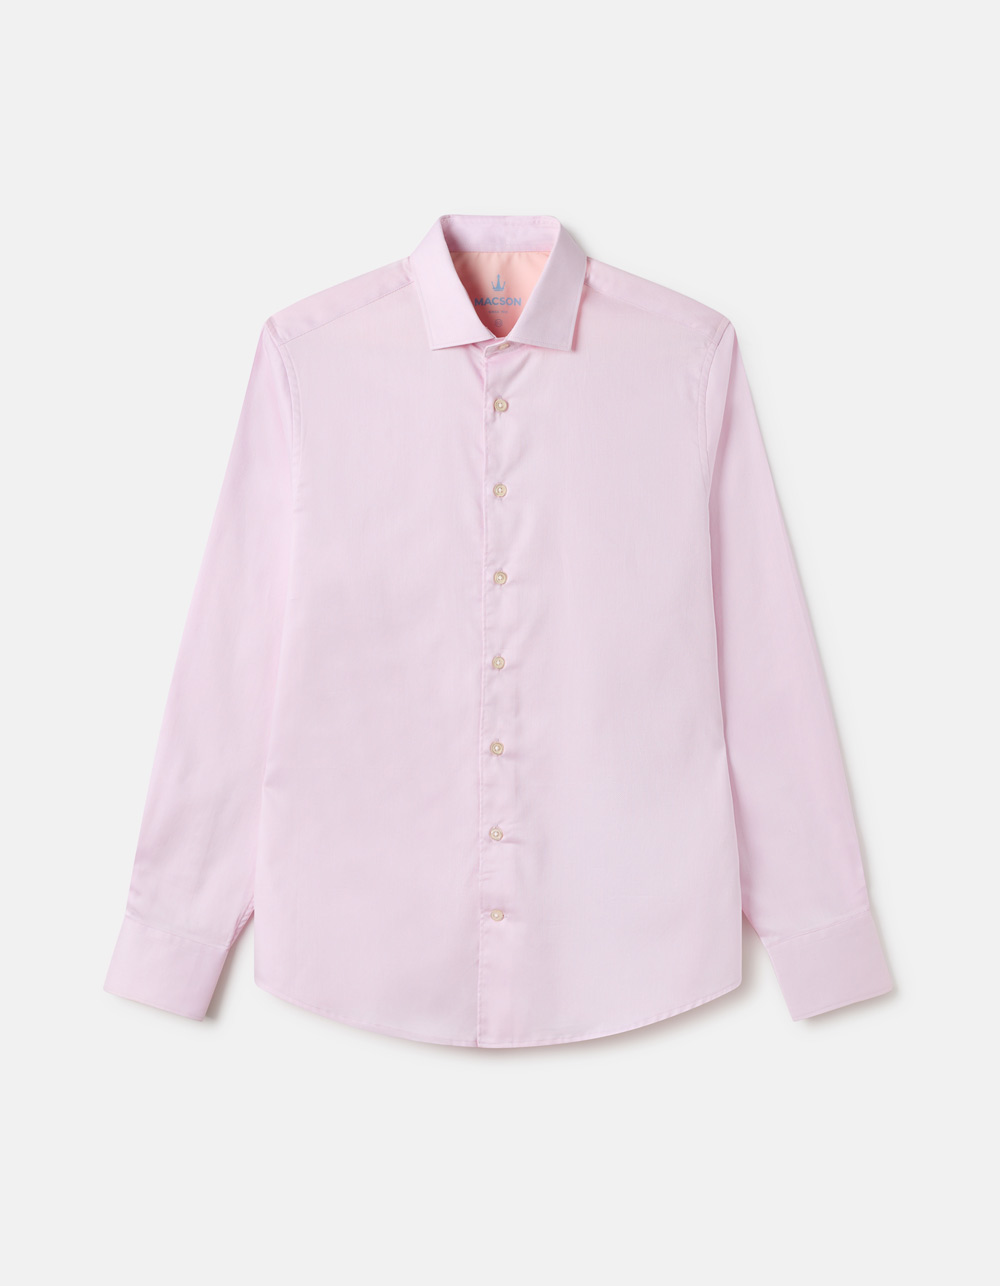 Camisa amb microestructura rombe rosa